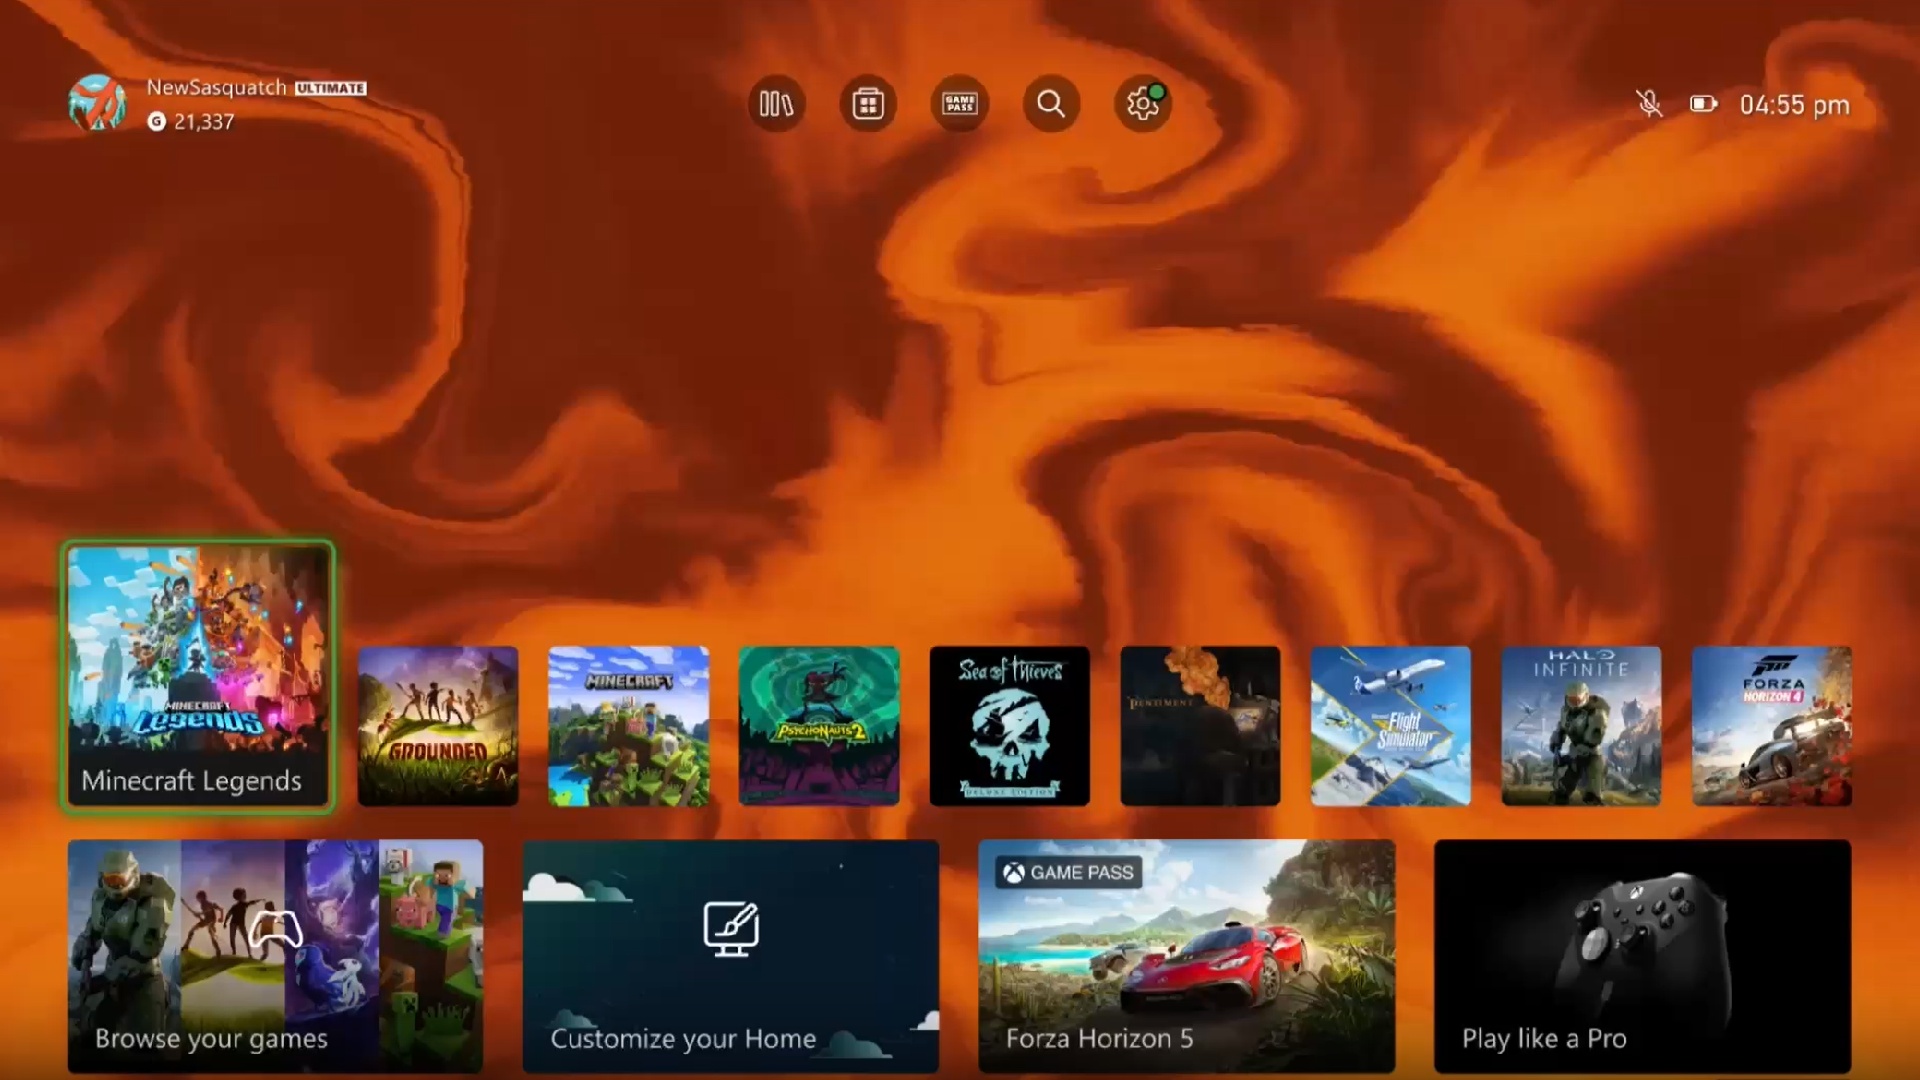 The Xbox Fire Vapor dynamic background